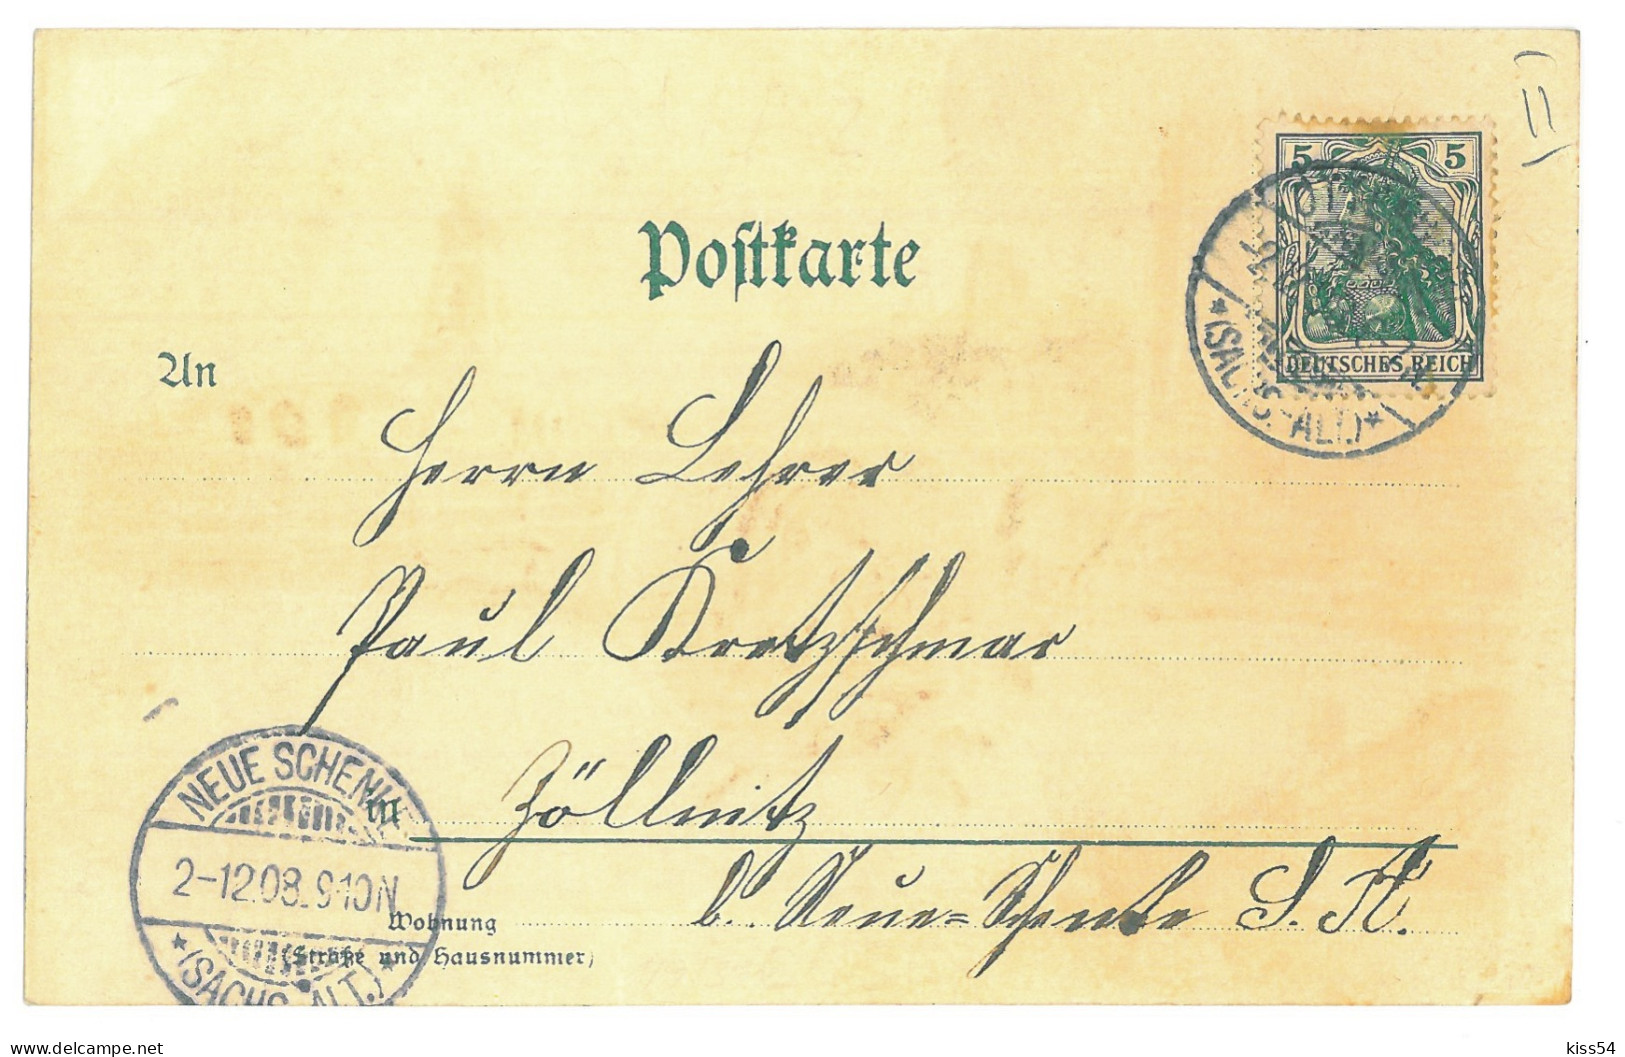 GER 03 - 16939 KYFFHAUSER, Litho, Germany - Old Postcard - Used - 1908 - Kyffhaeuser